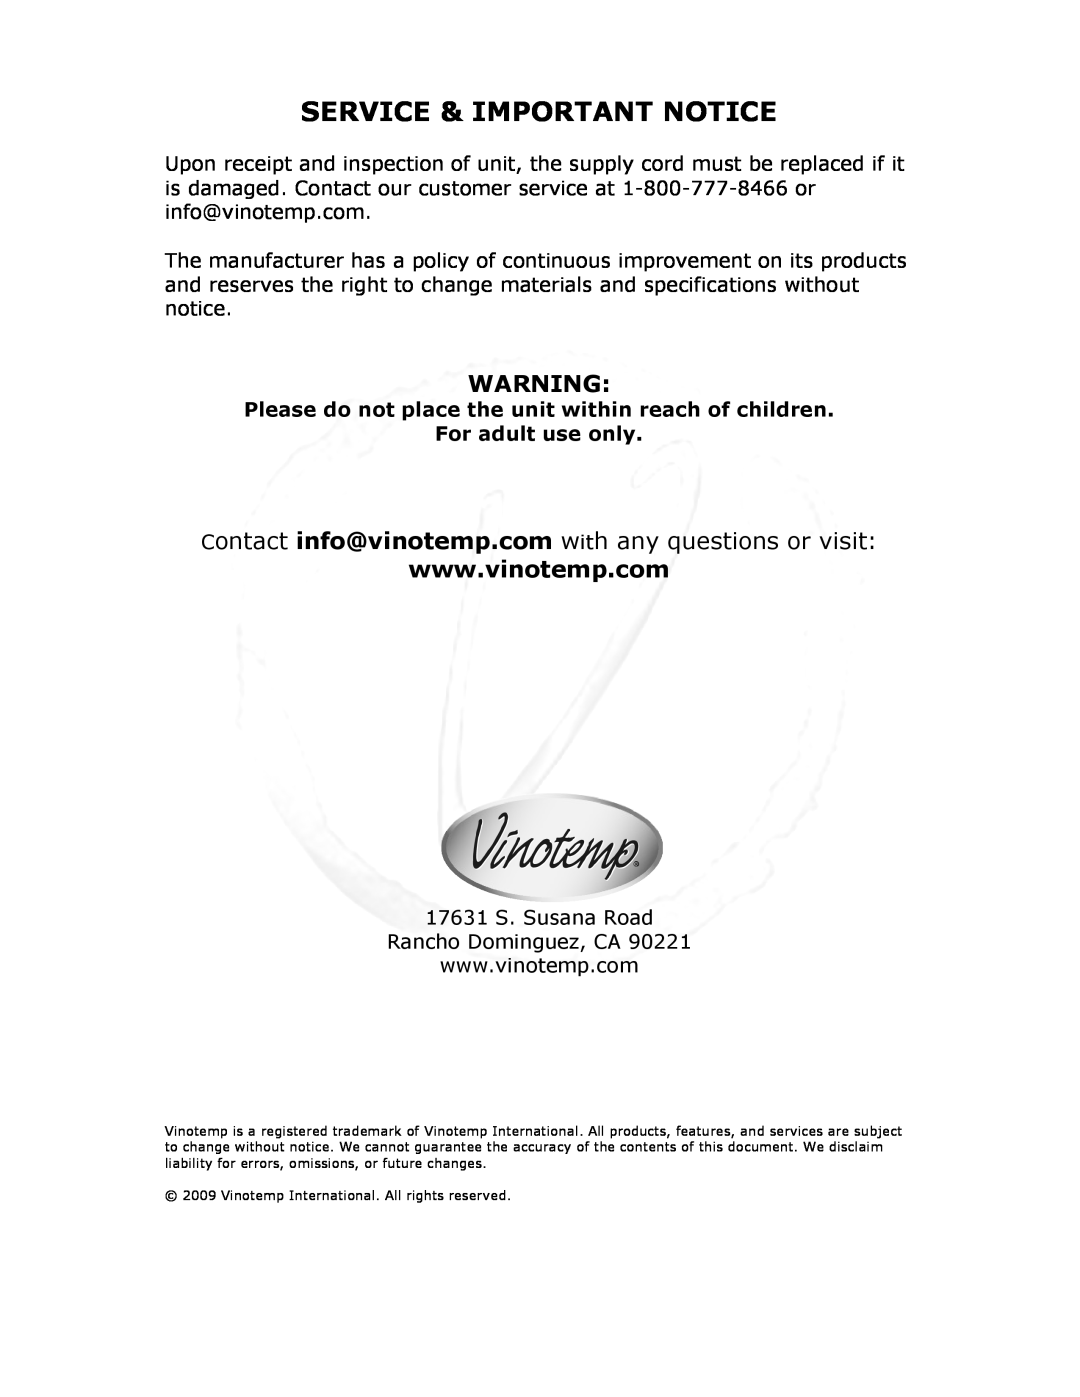 Vinotemp VT-34 TS owner manual Service & Important Notice, W W W . V I N O T E M P . C O M 